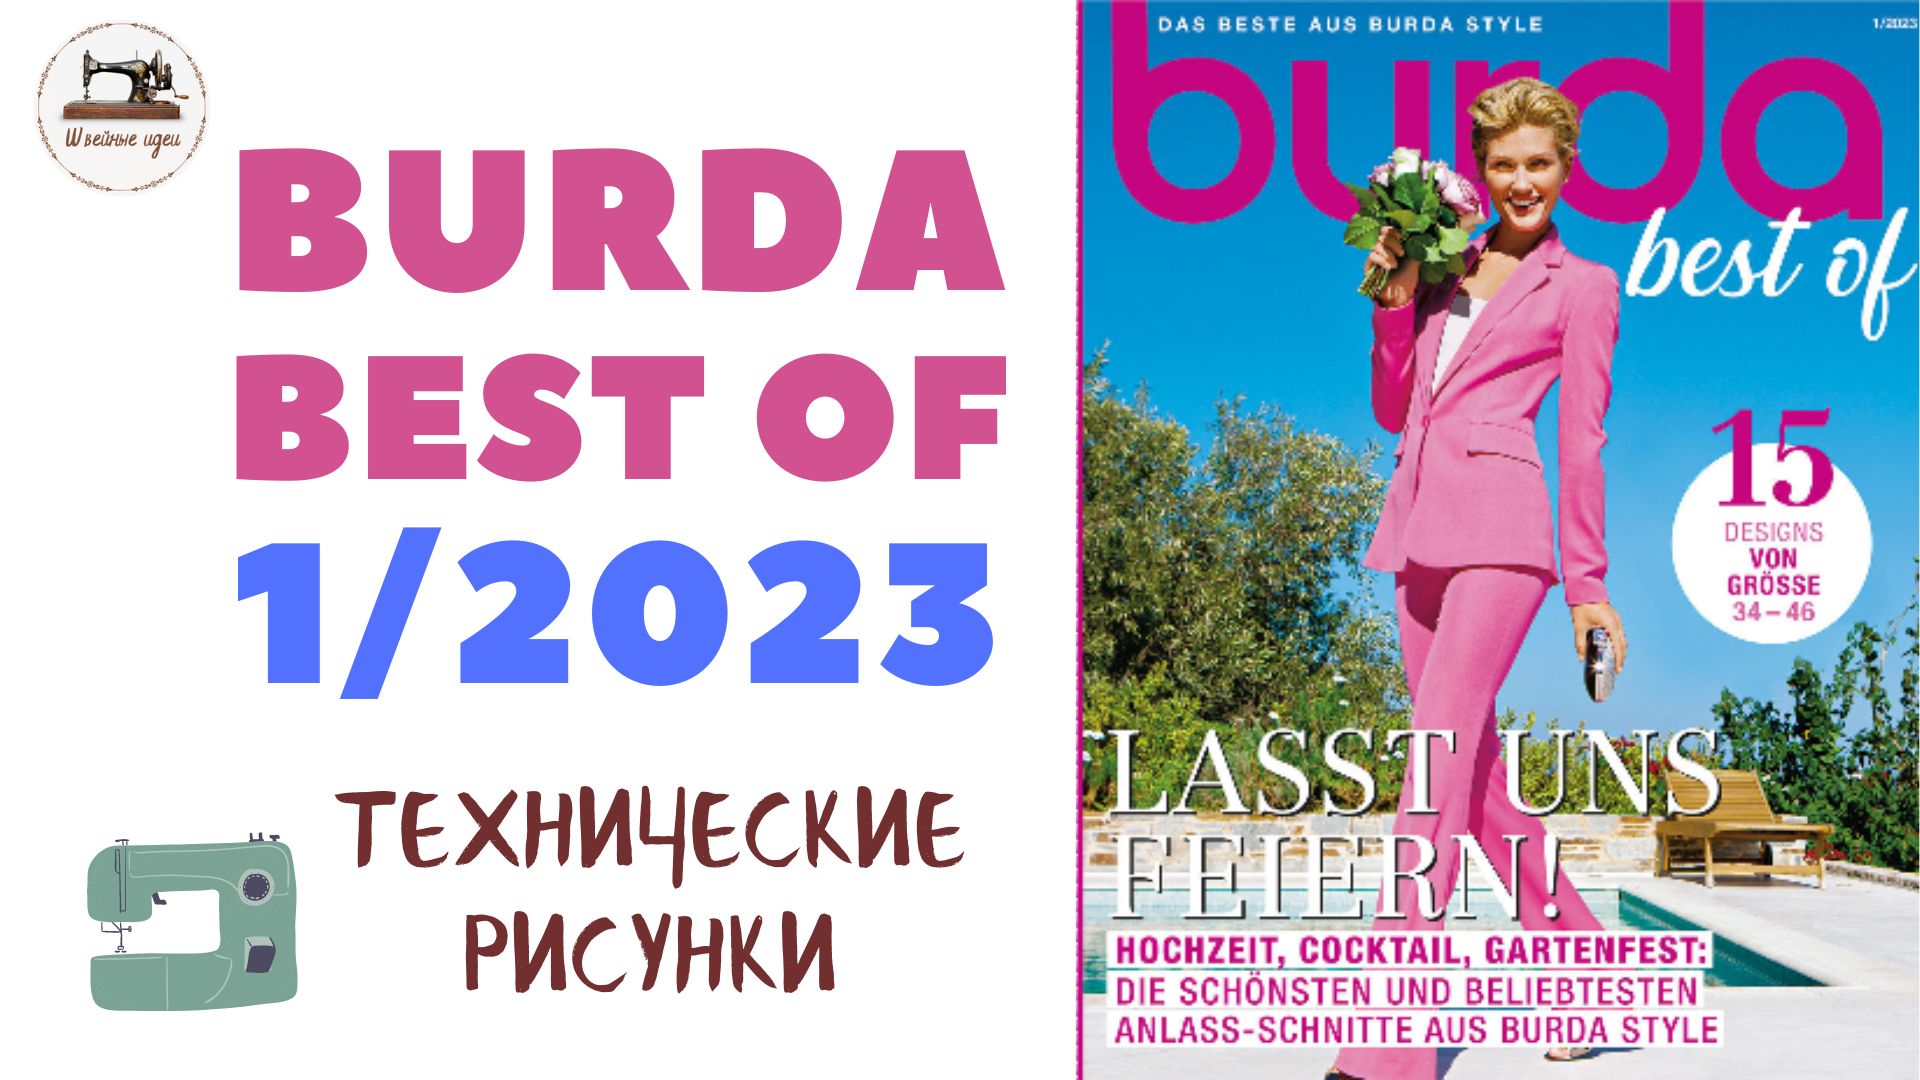 Burda Best of 1/2023 Технические рисунки